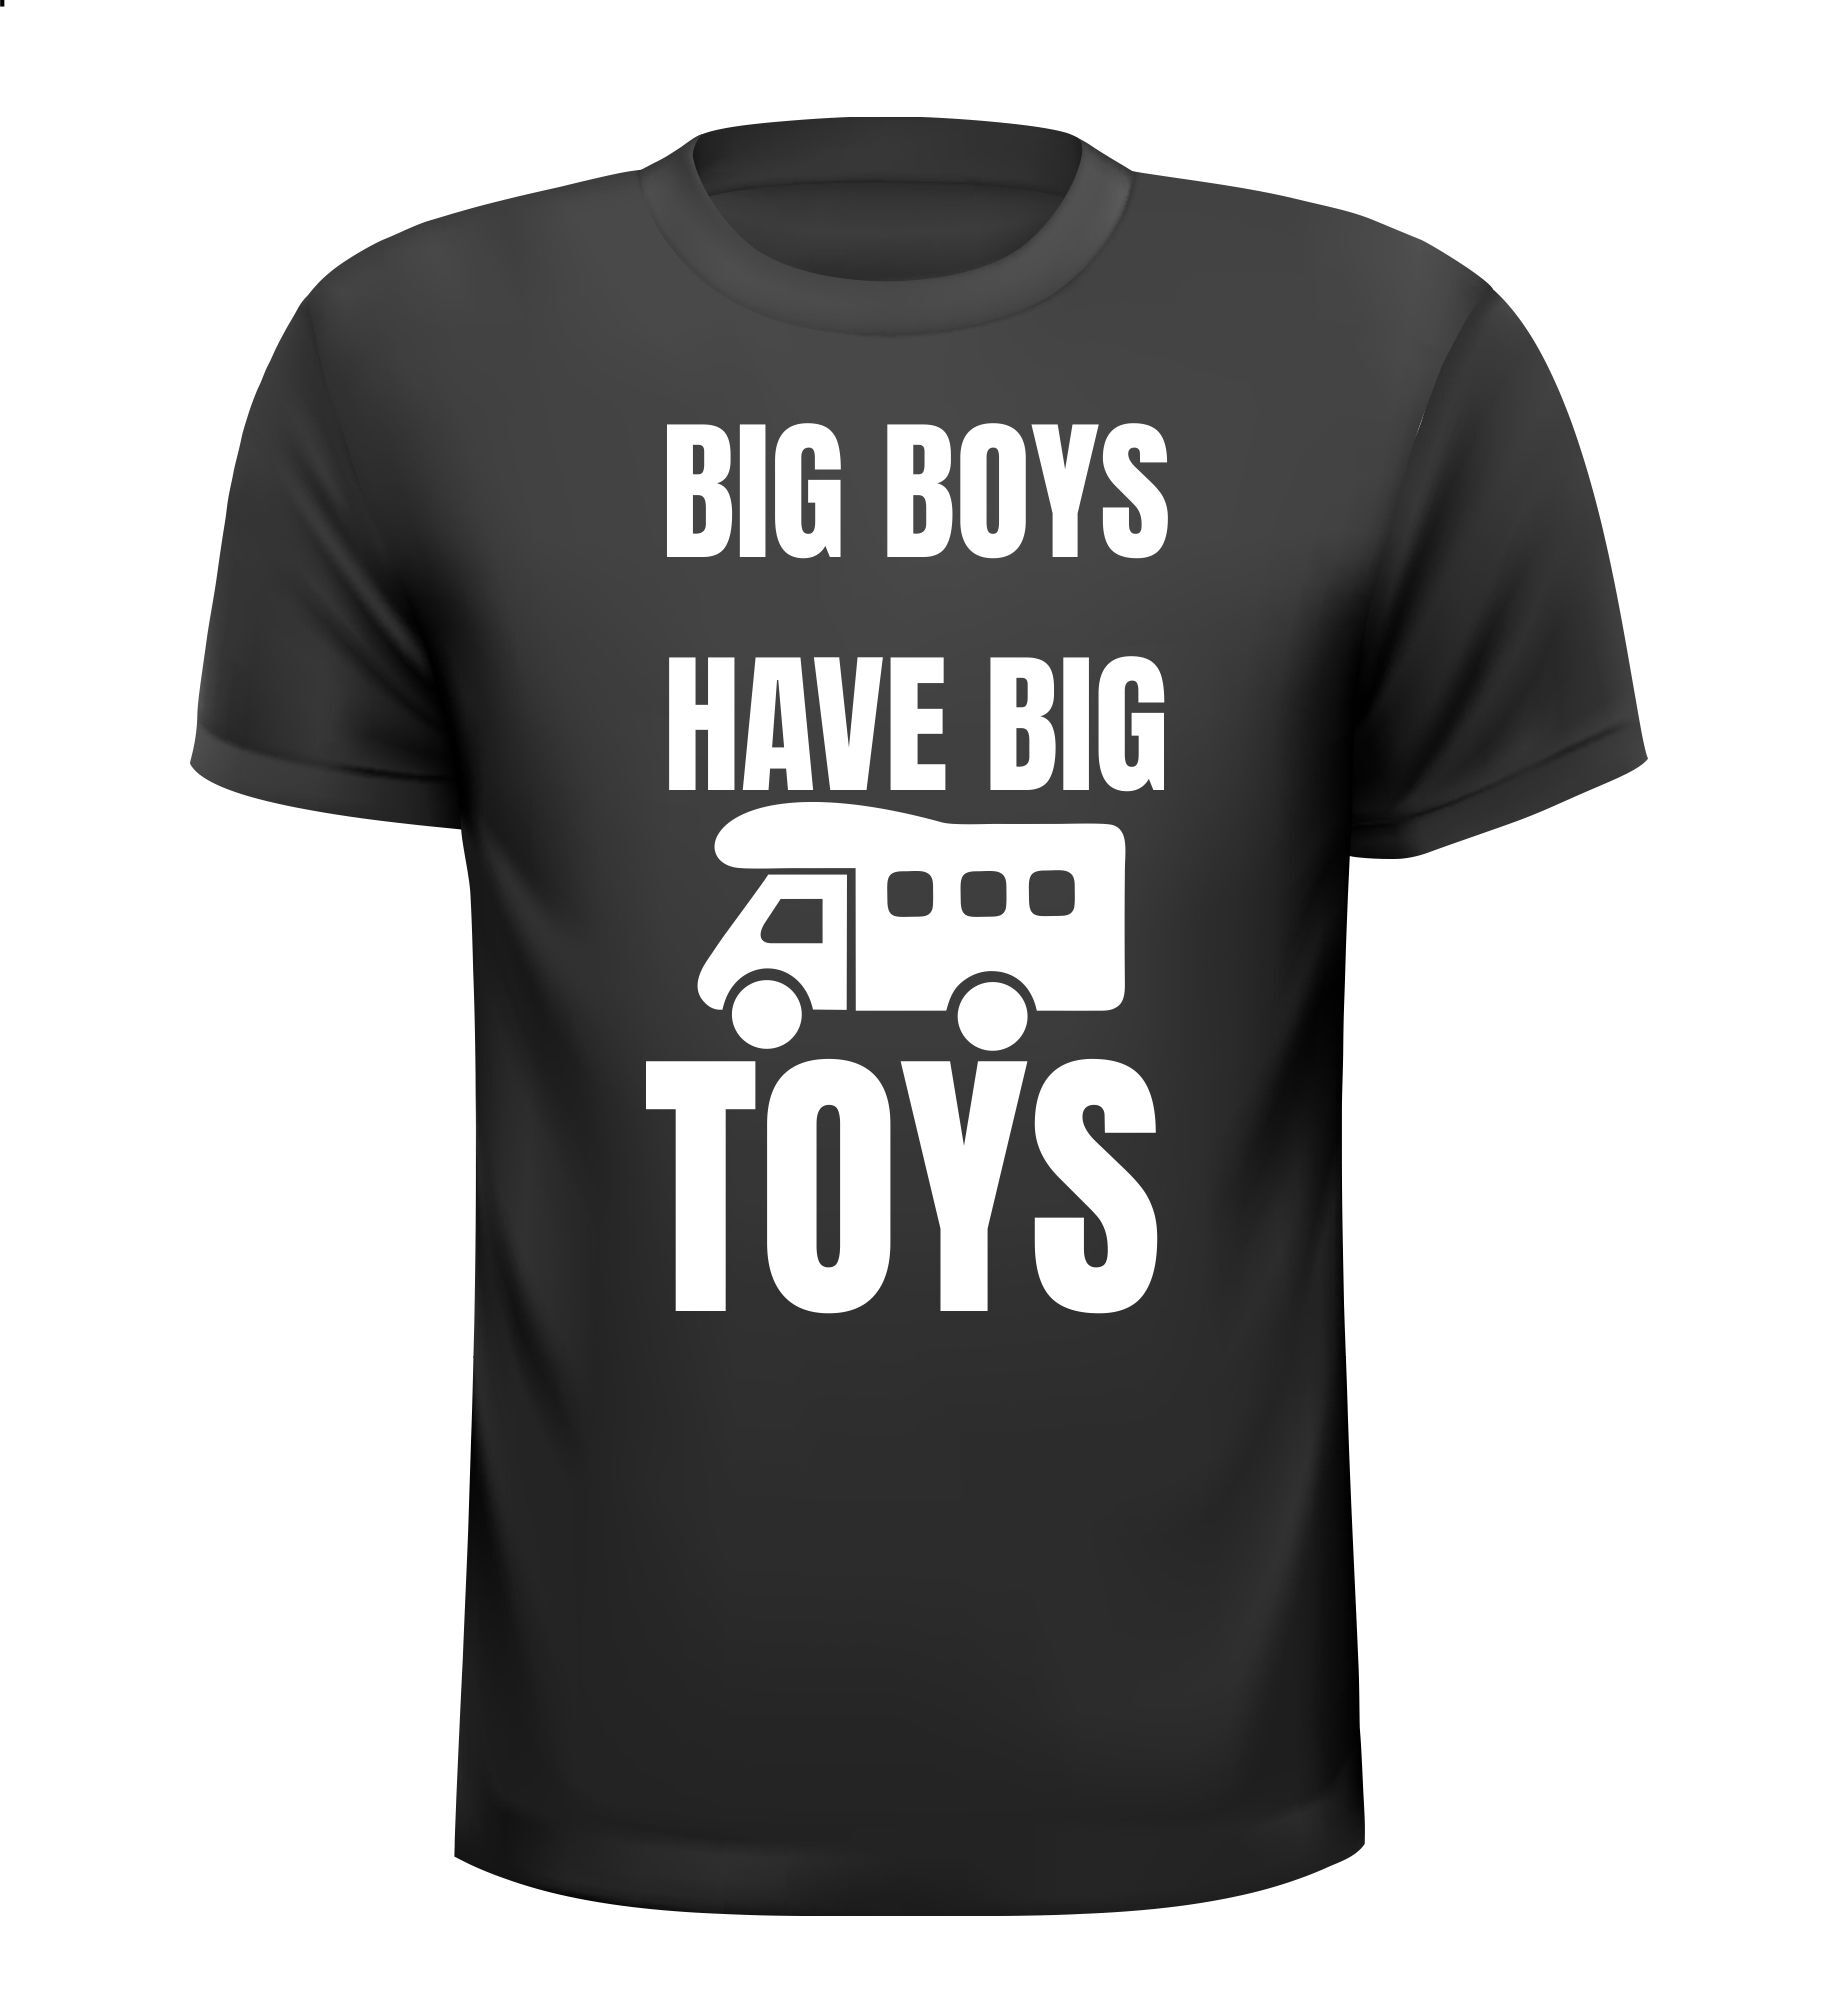 Shirtje voor de camper liefhebber big boys have big toysl leuk grappig stoer